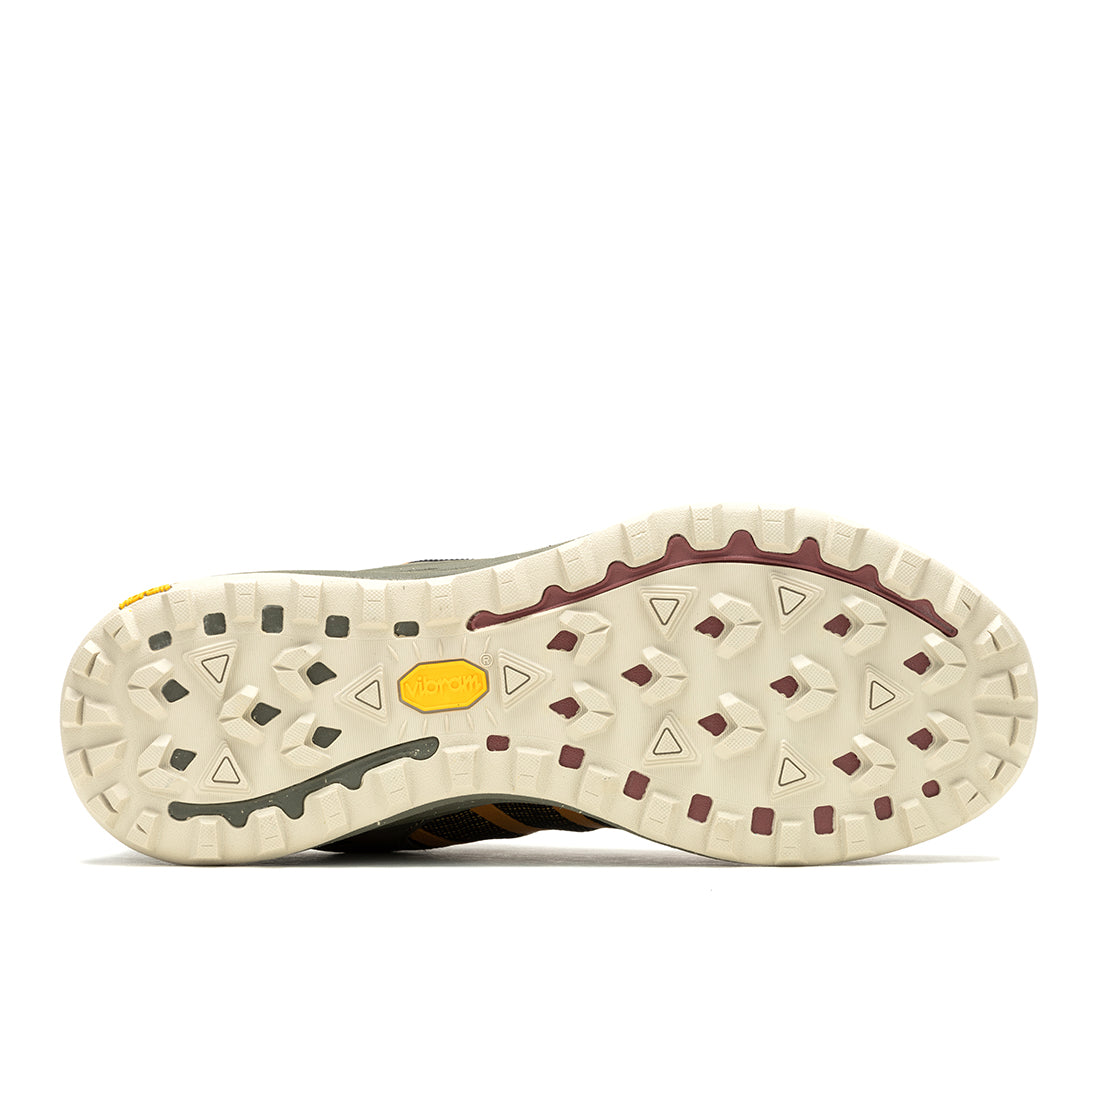 Nova 3-Spice/Amber Mens Trail Running Shoes | Merrell Online Store